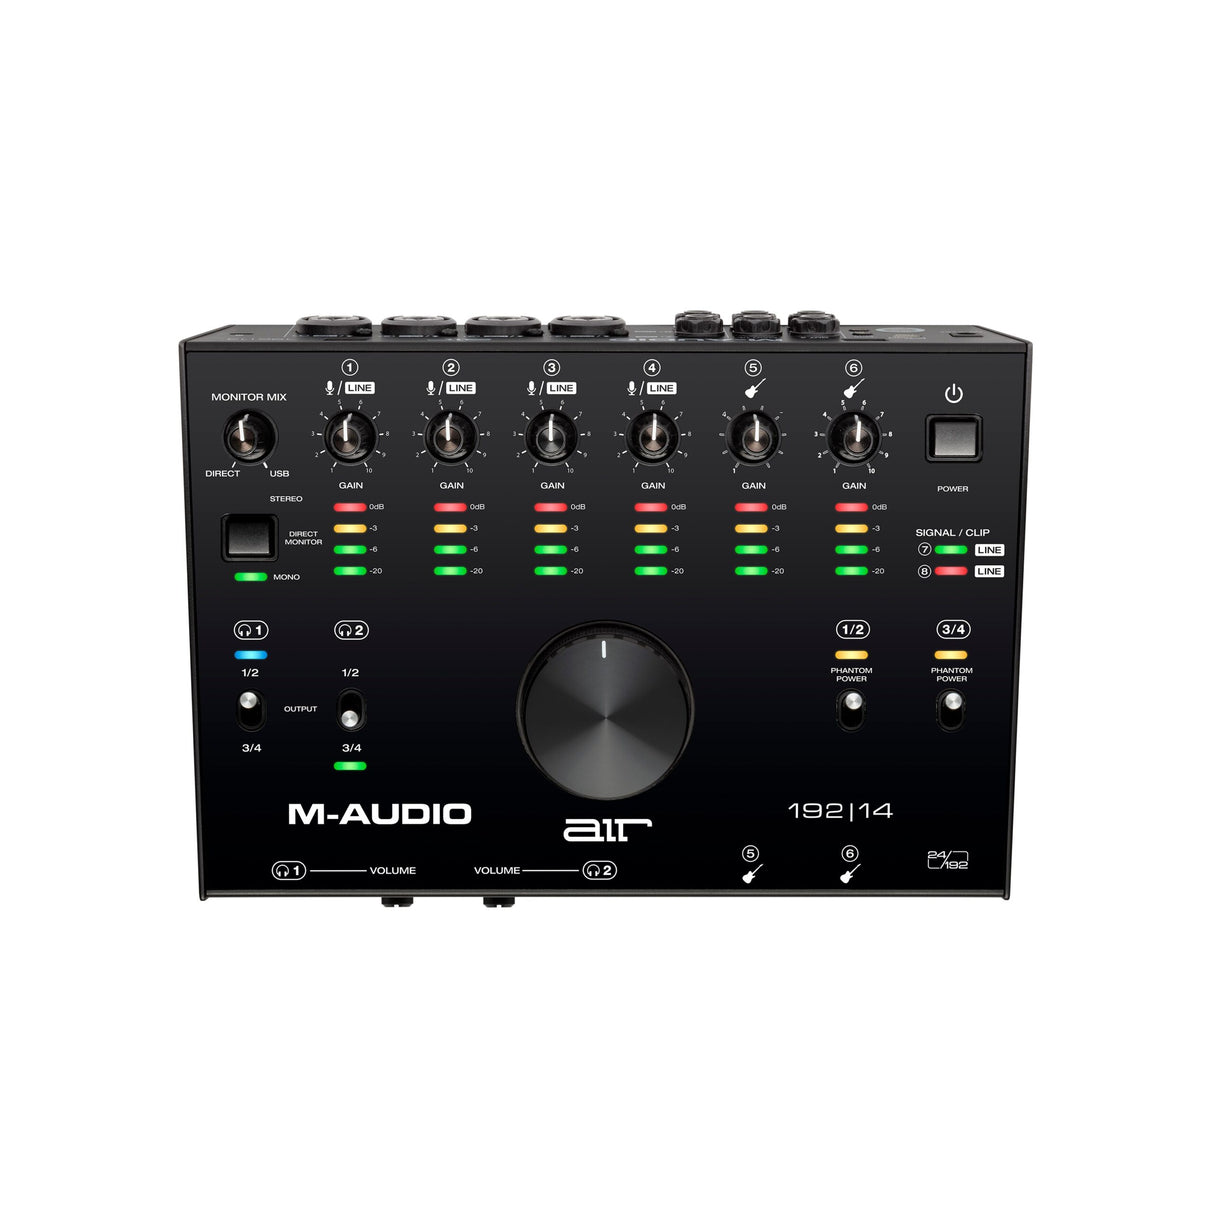 M-Audio AIR 192|14 8 x 4 24/192 USB Audio Interface